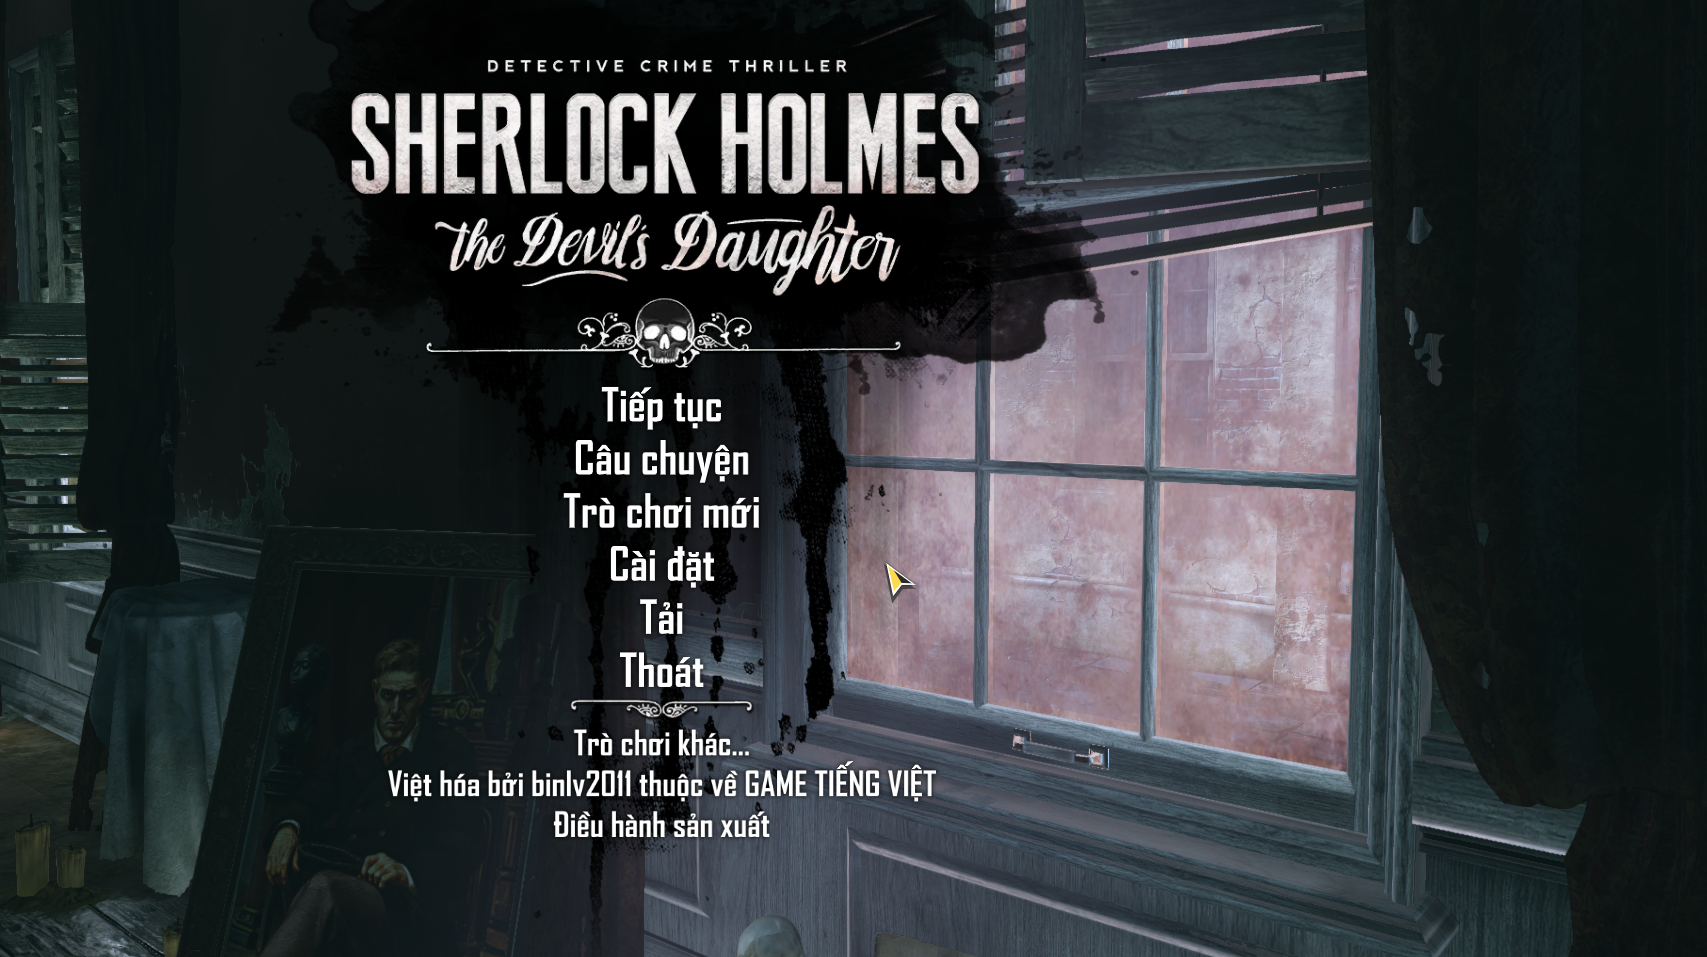 Sherlock Holmes: The Devil’s Daughter Full Crack + Việt Hóa mới nhất